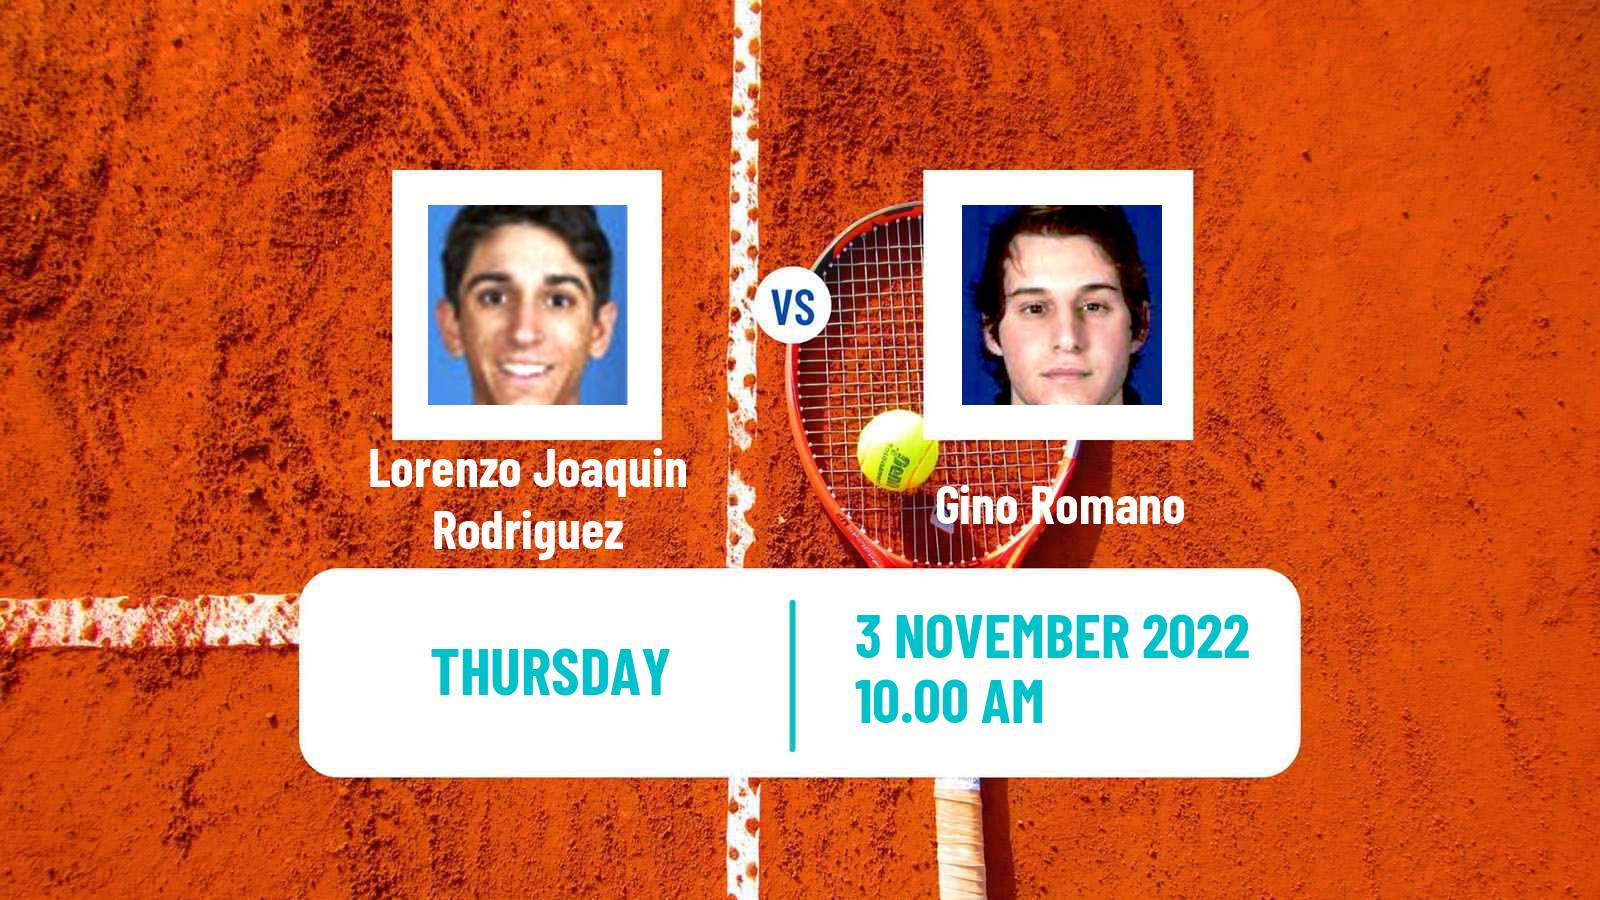 Tennis ITF Tournaments Lorenzo Joaquin Rodriguez - Gino Romano